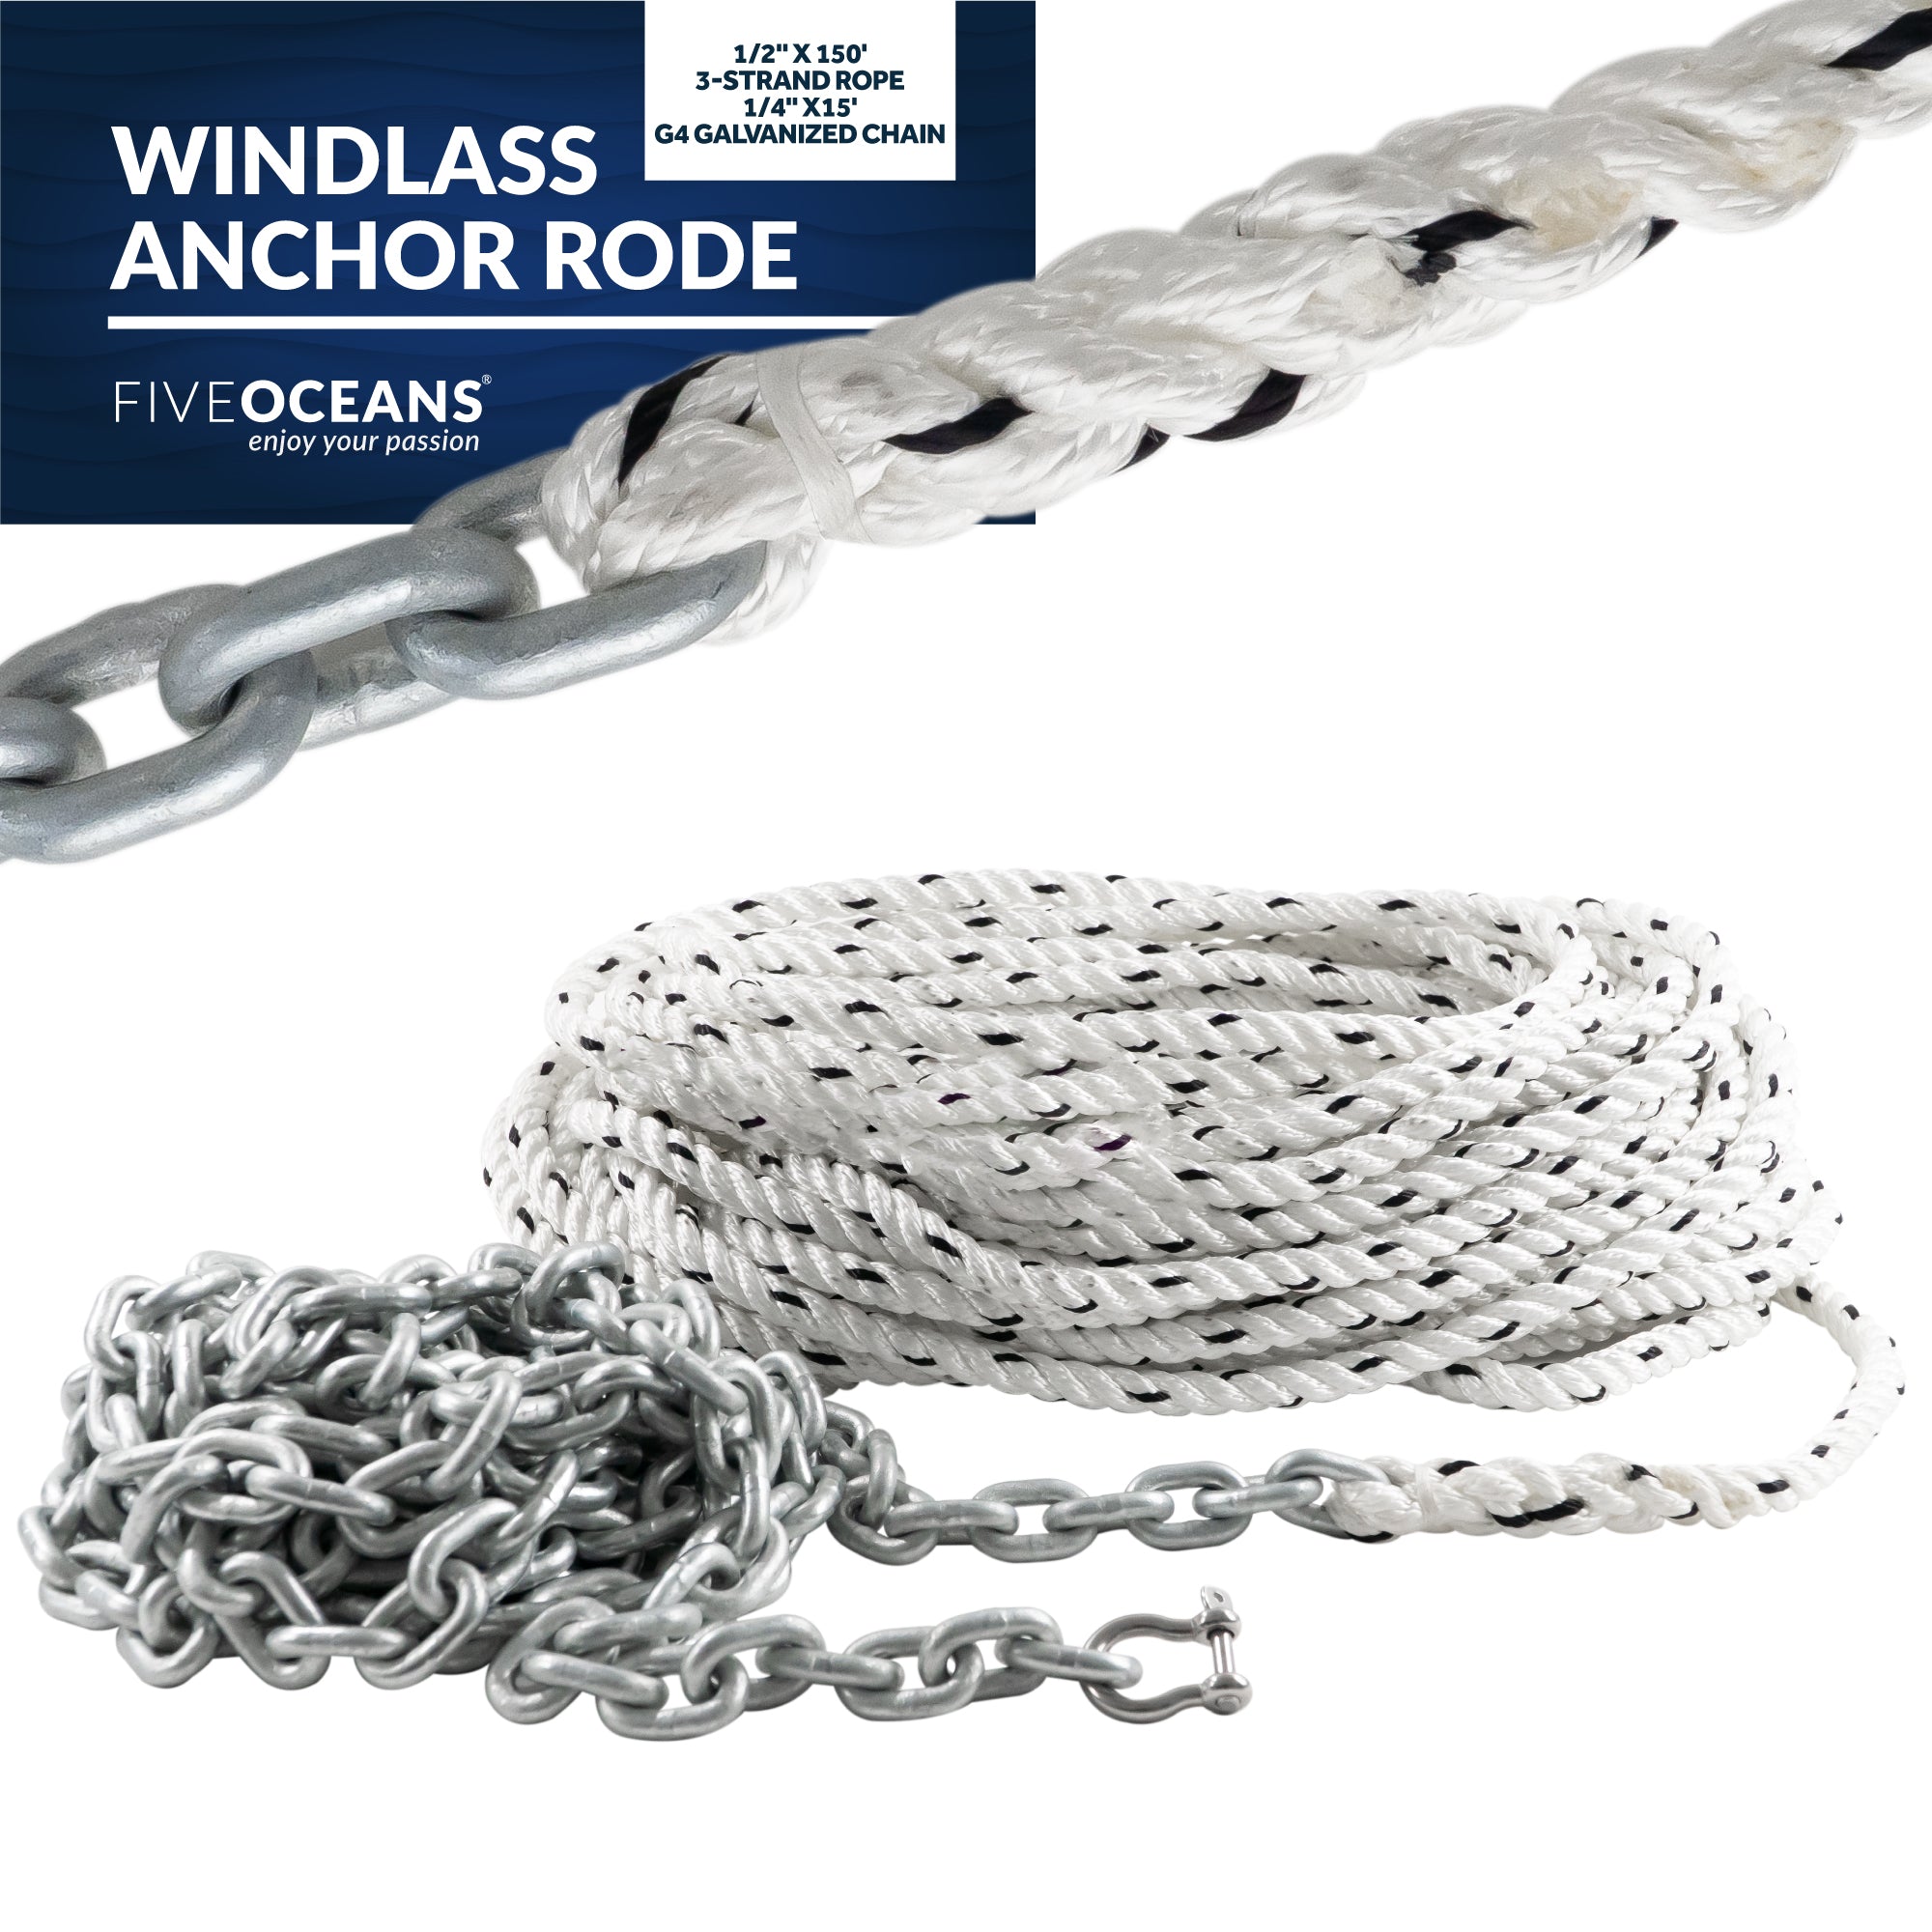 Windlass Anchor Rode, 1/2" x 150' Nylon 3-Strand Rope, 1/4" x 15'  G4 Hot-Dipped Galvanized Steel Chain - FO4522